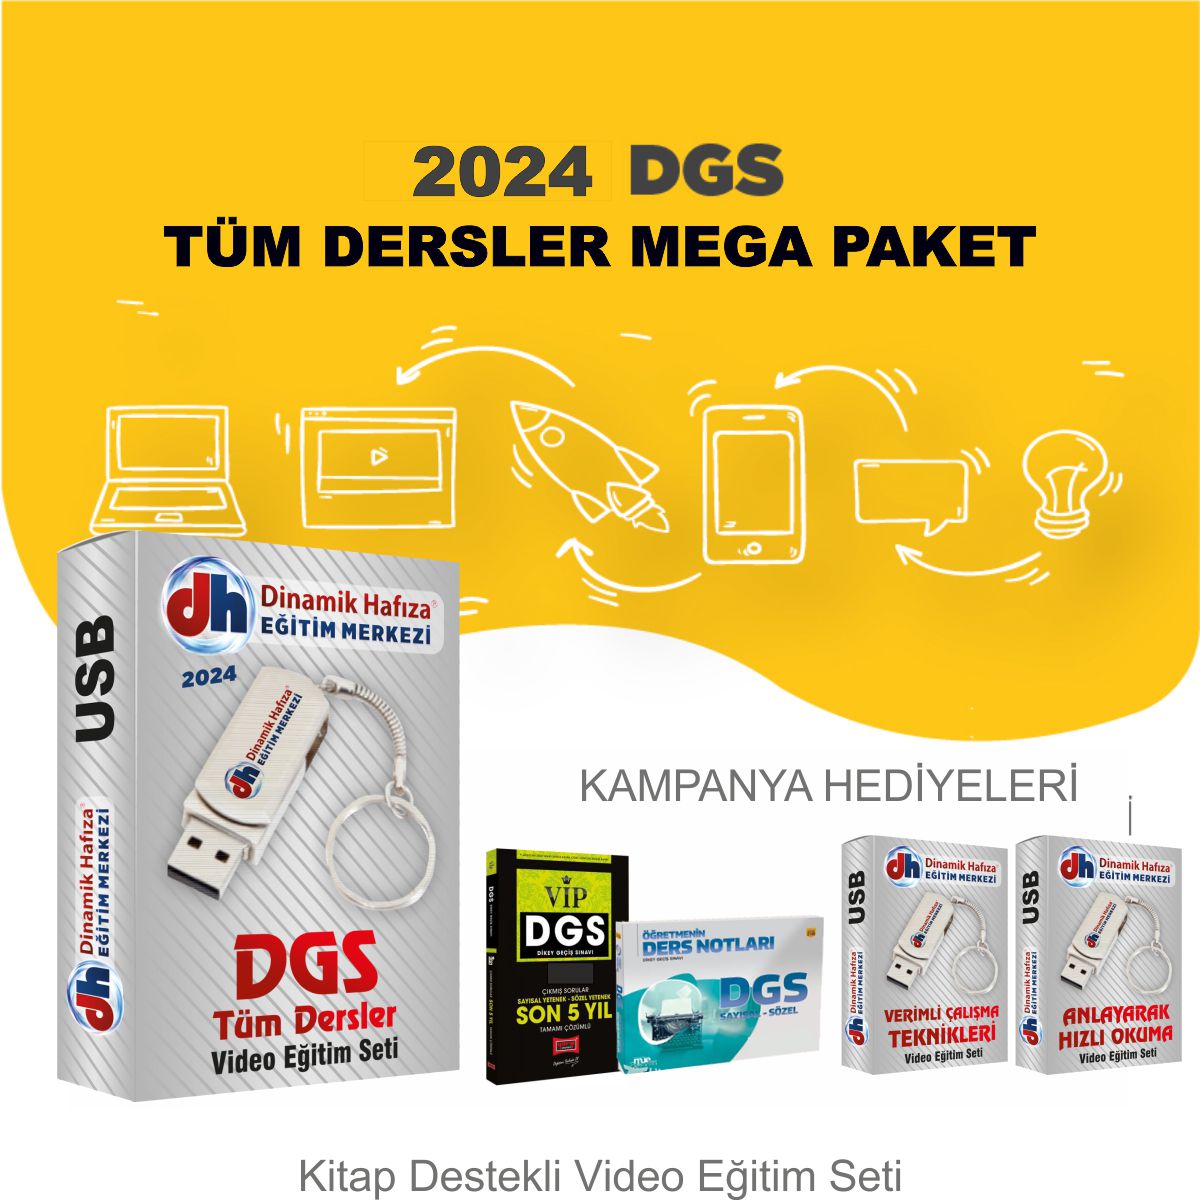 2022 DGS Tüm Dersler Mega Paket - 